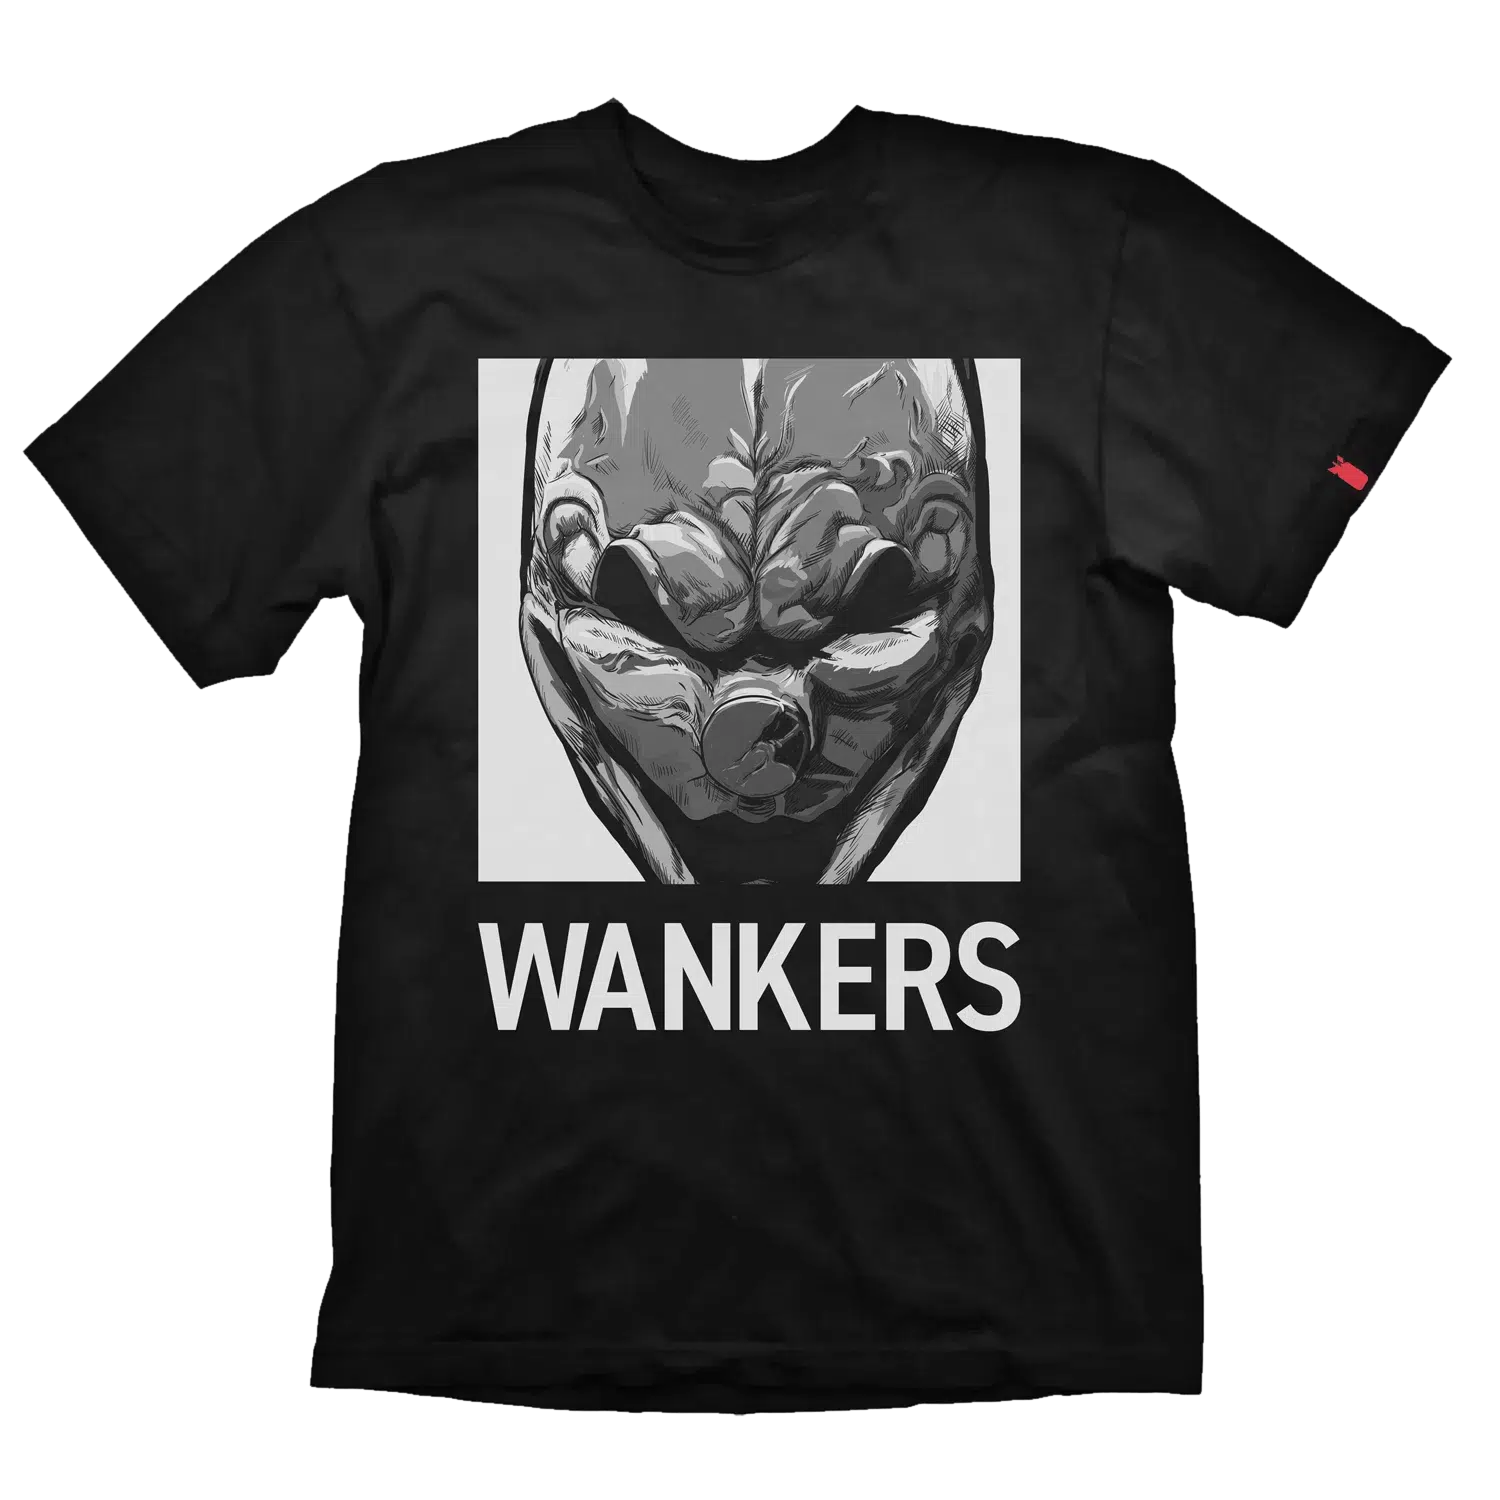 Payday 2 T-Shirt "Wankers" Black XXL